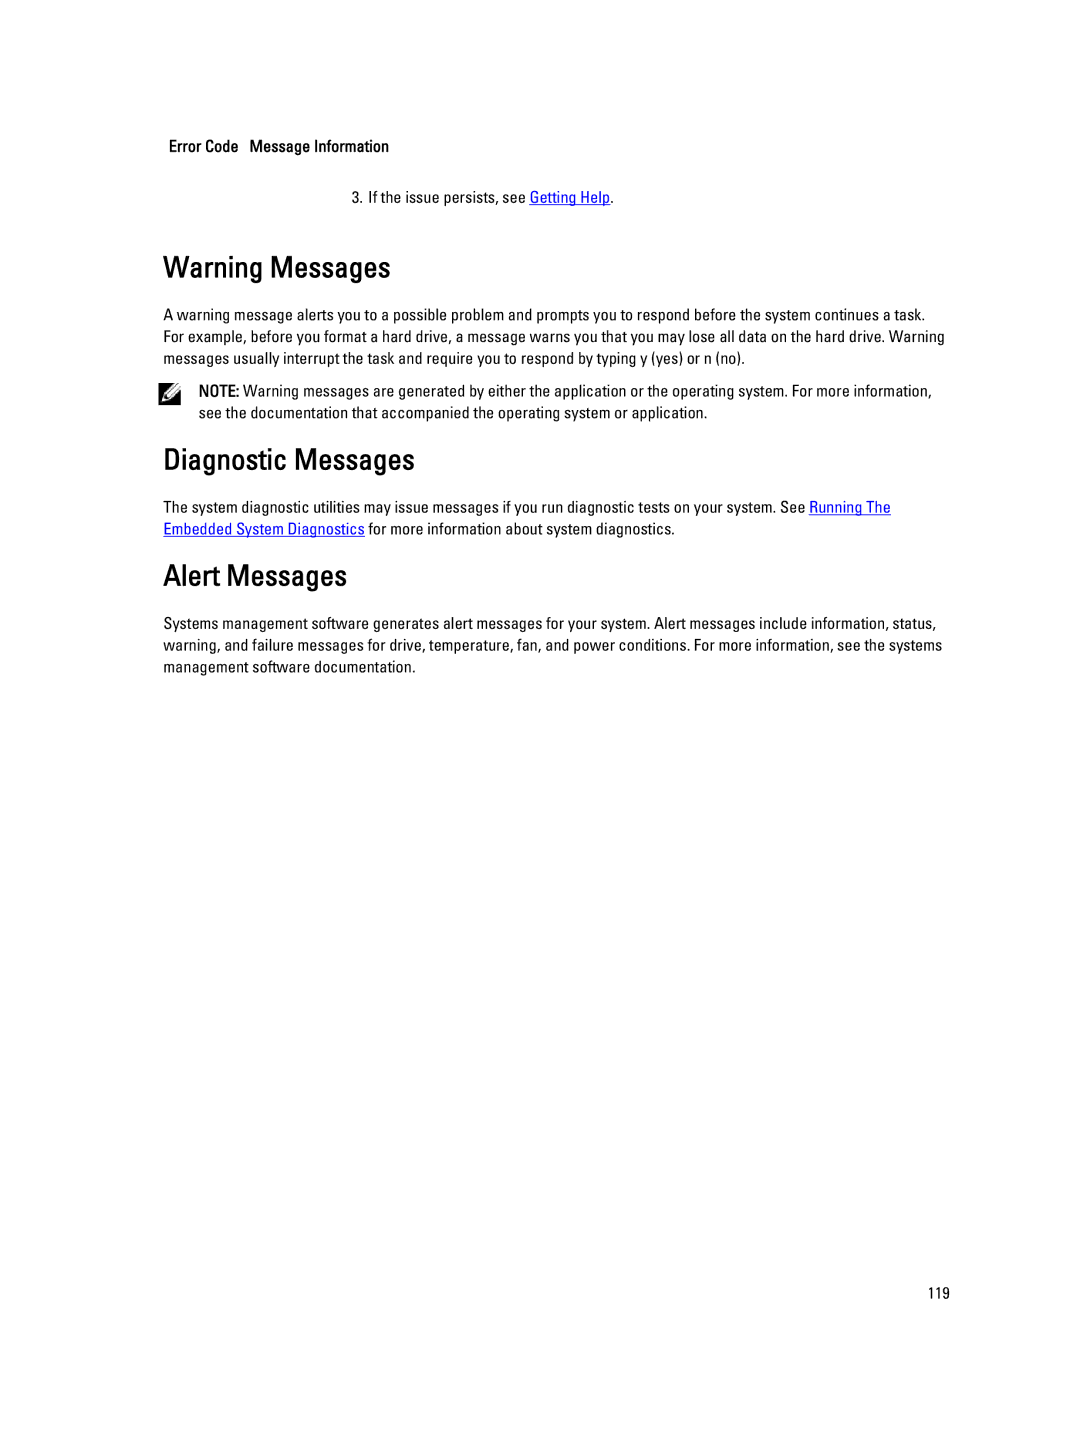 Dell QHB owner manual Diagnostic Messages, Alert Messages 